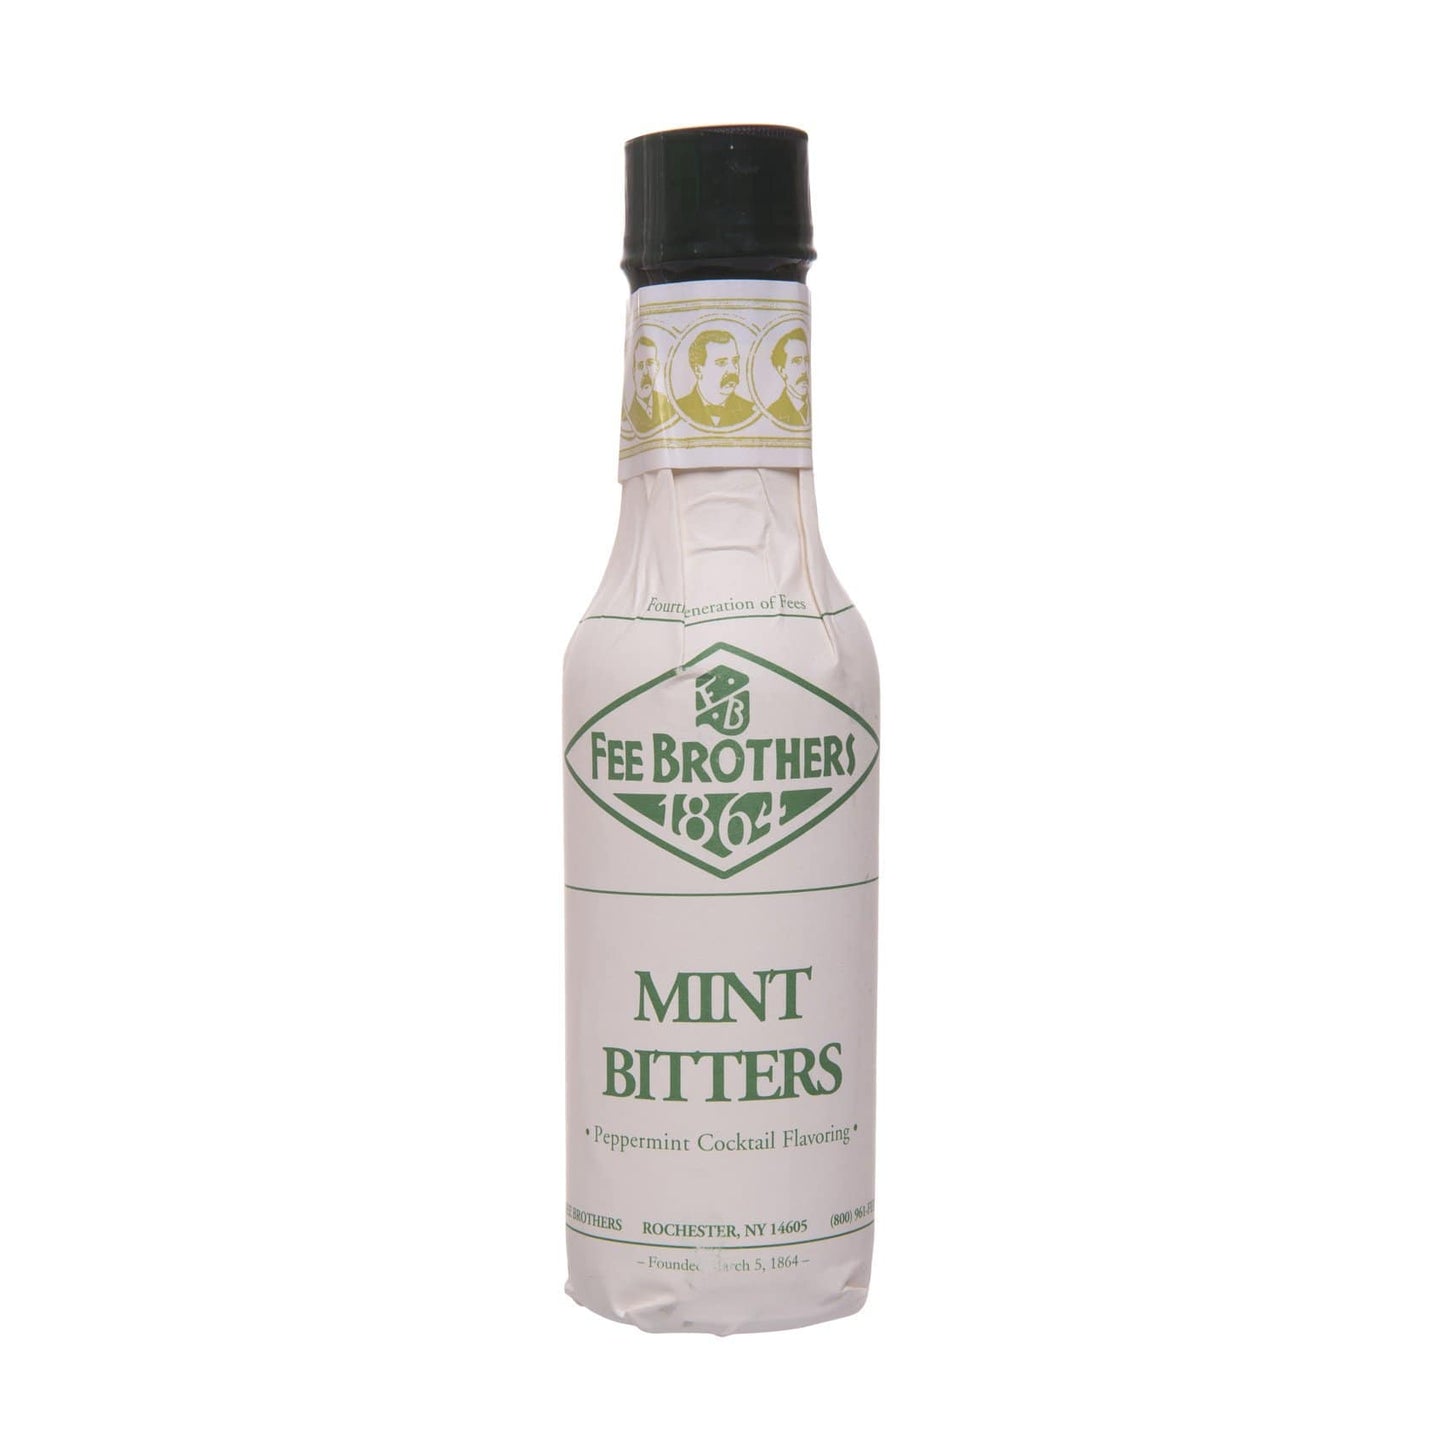 Fee Brothers Mint Bitters - EC Proof